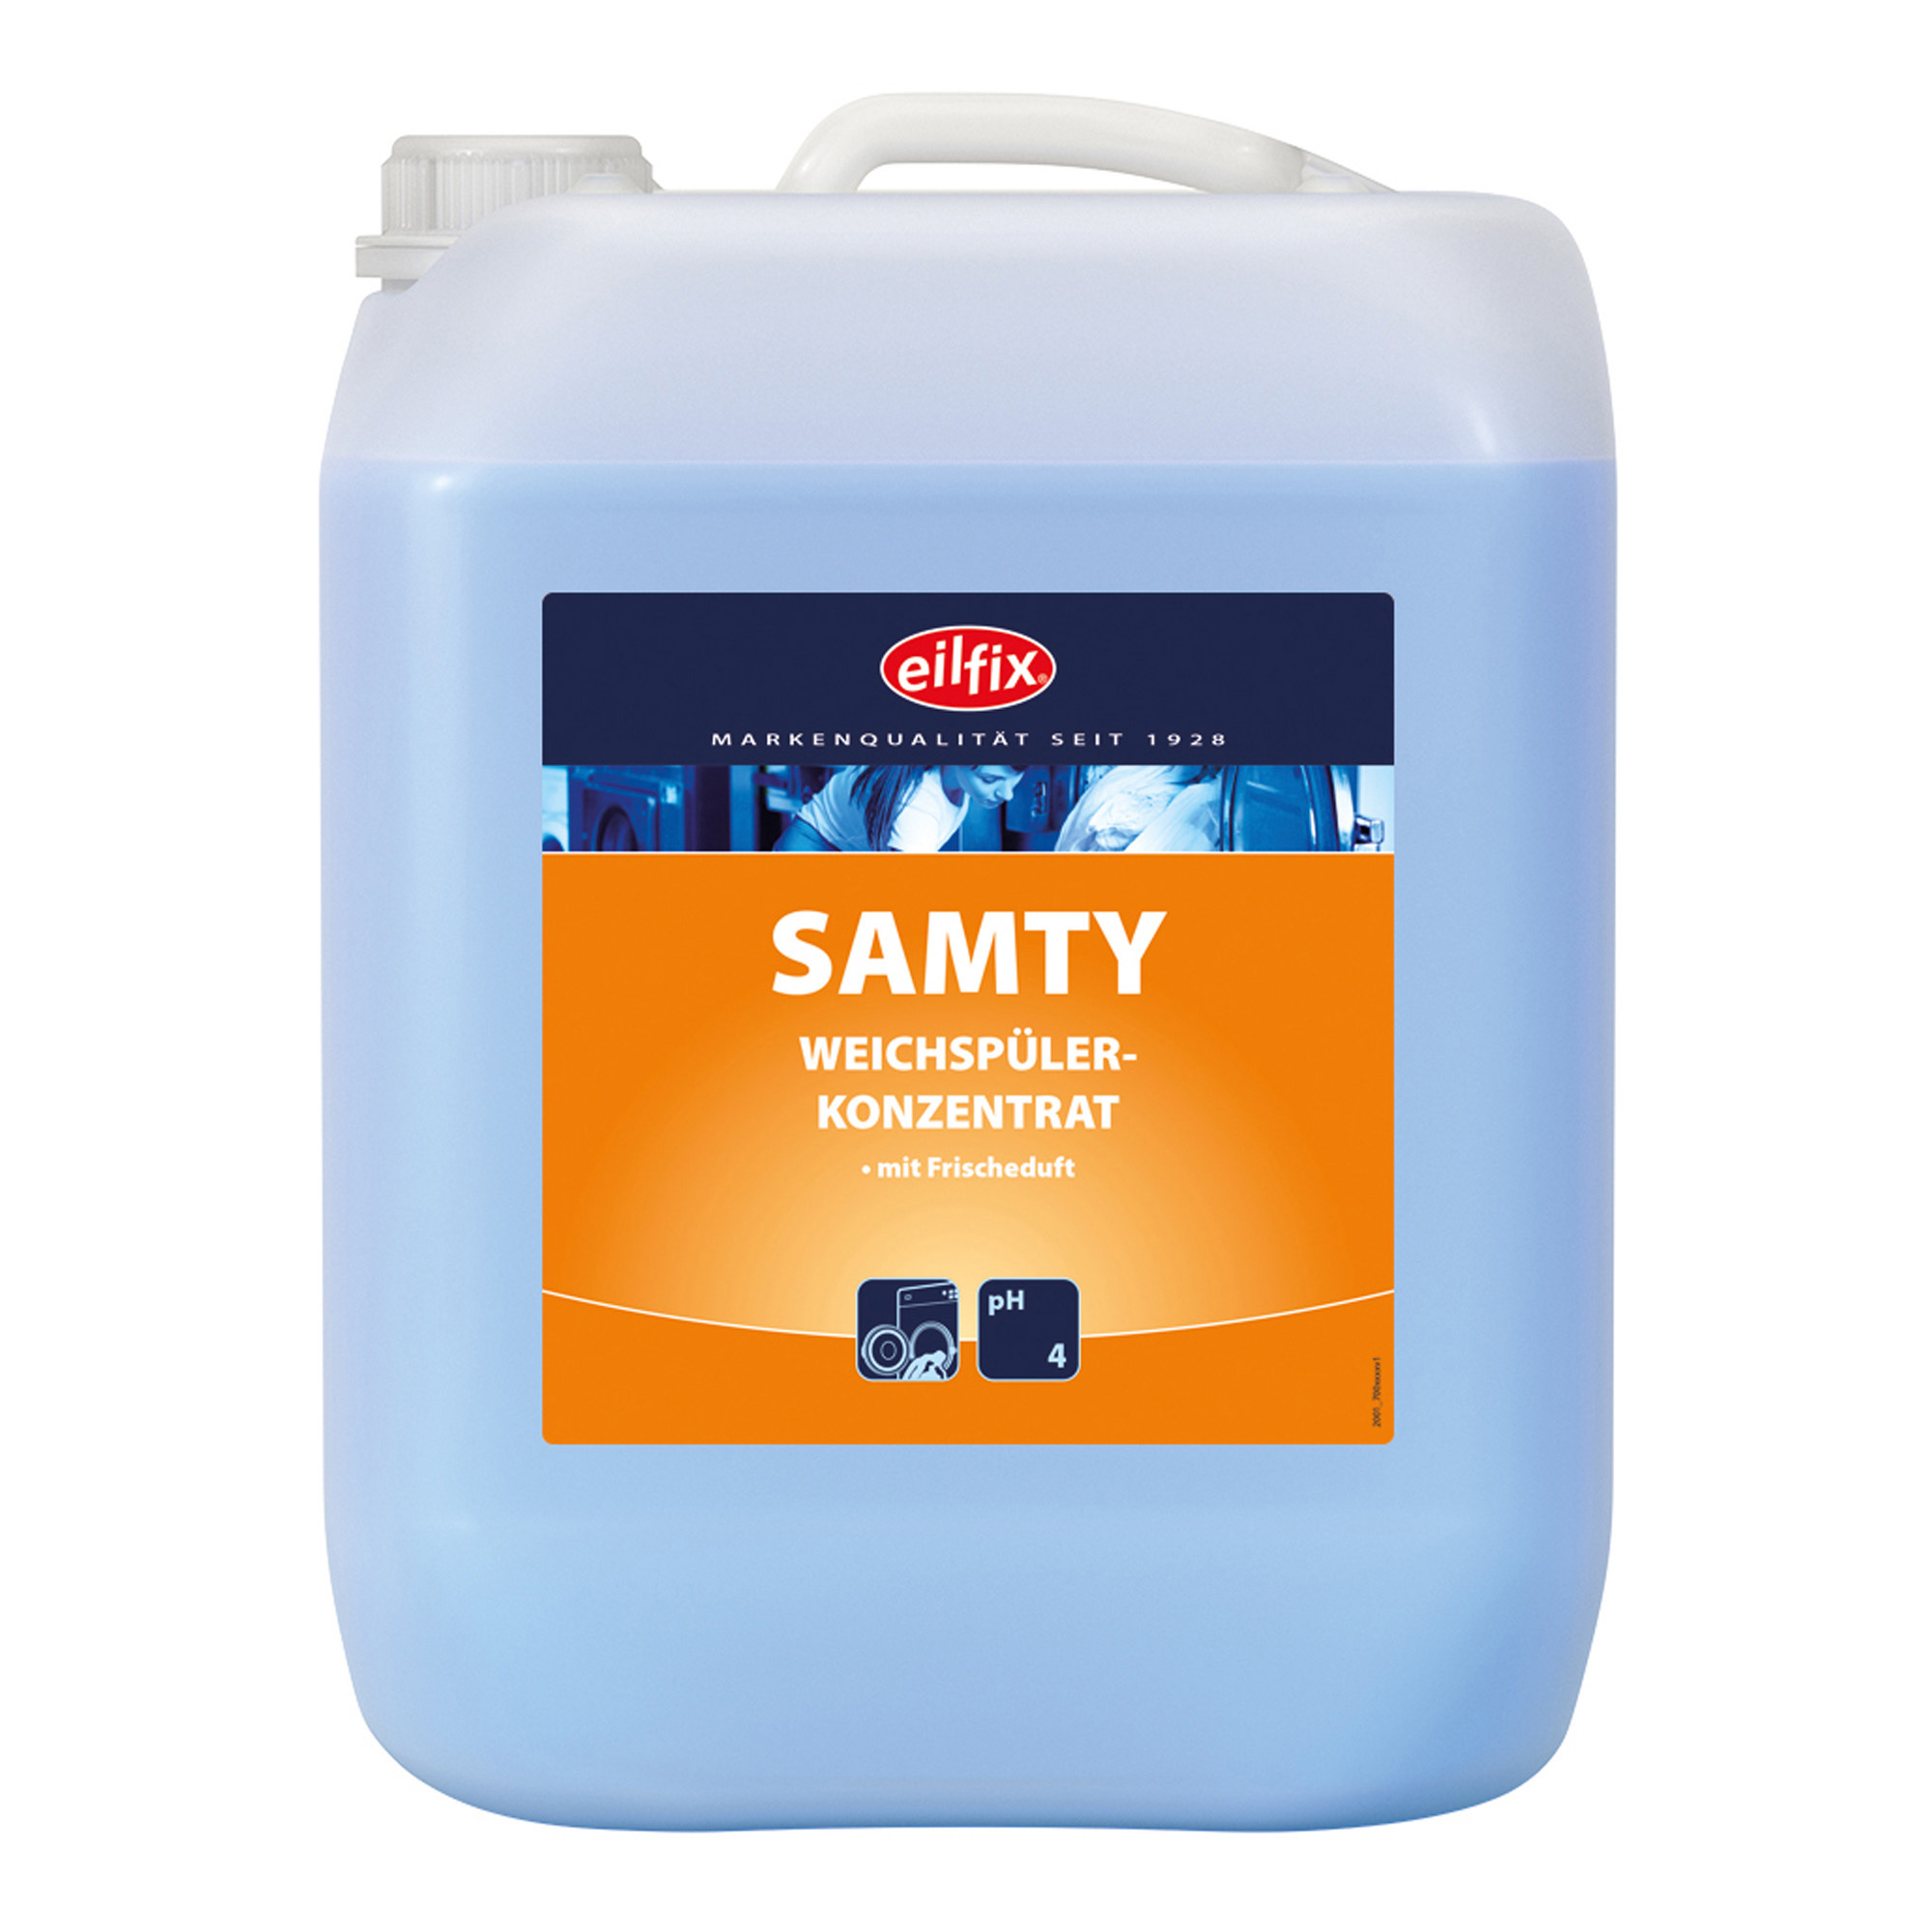 Eilfix Samty Weichspüler 5 Liter Kanister 100039-005-000_1